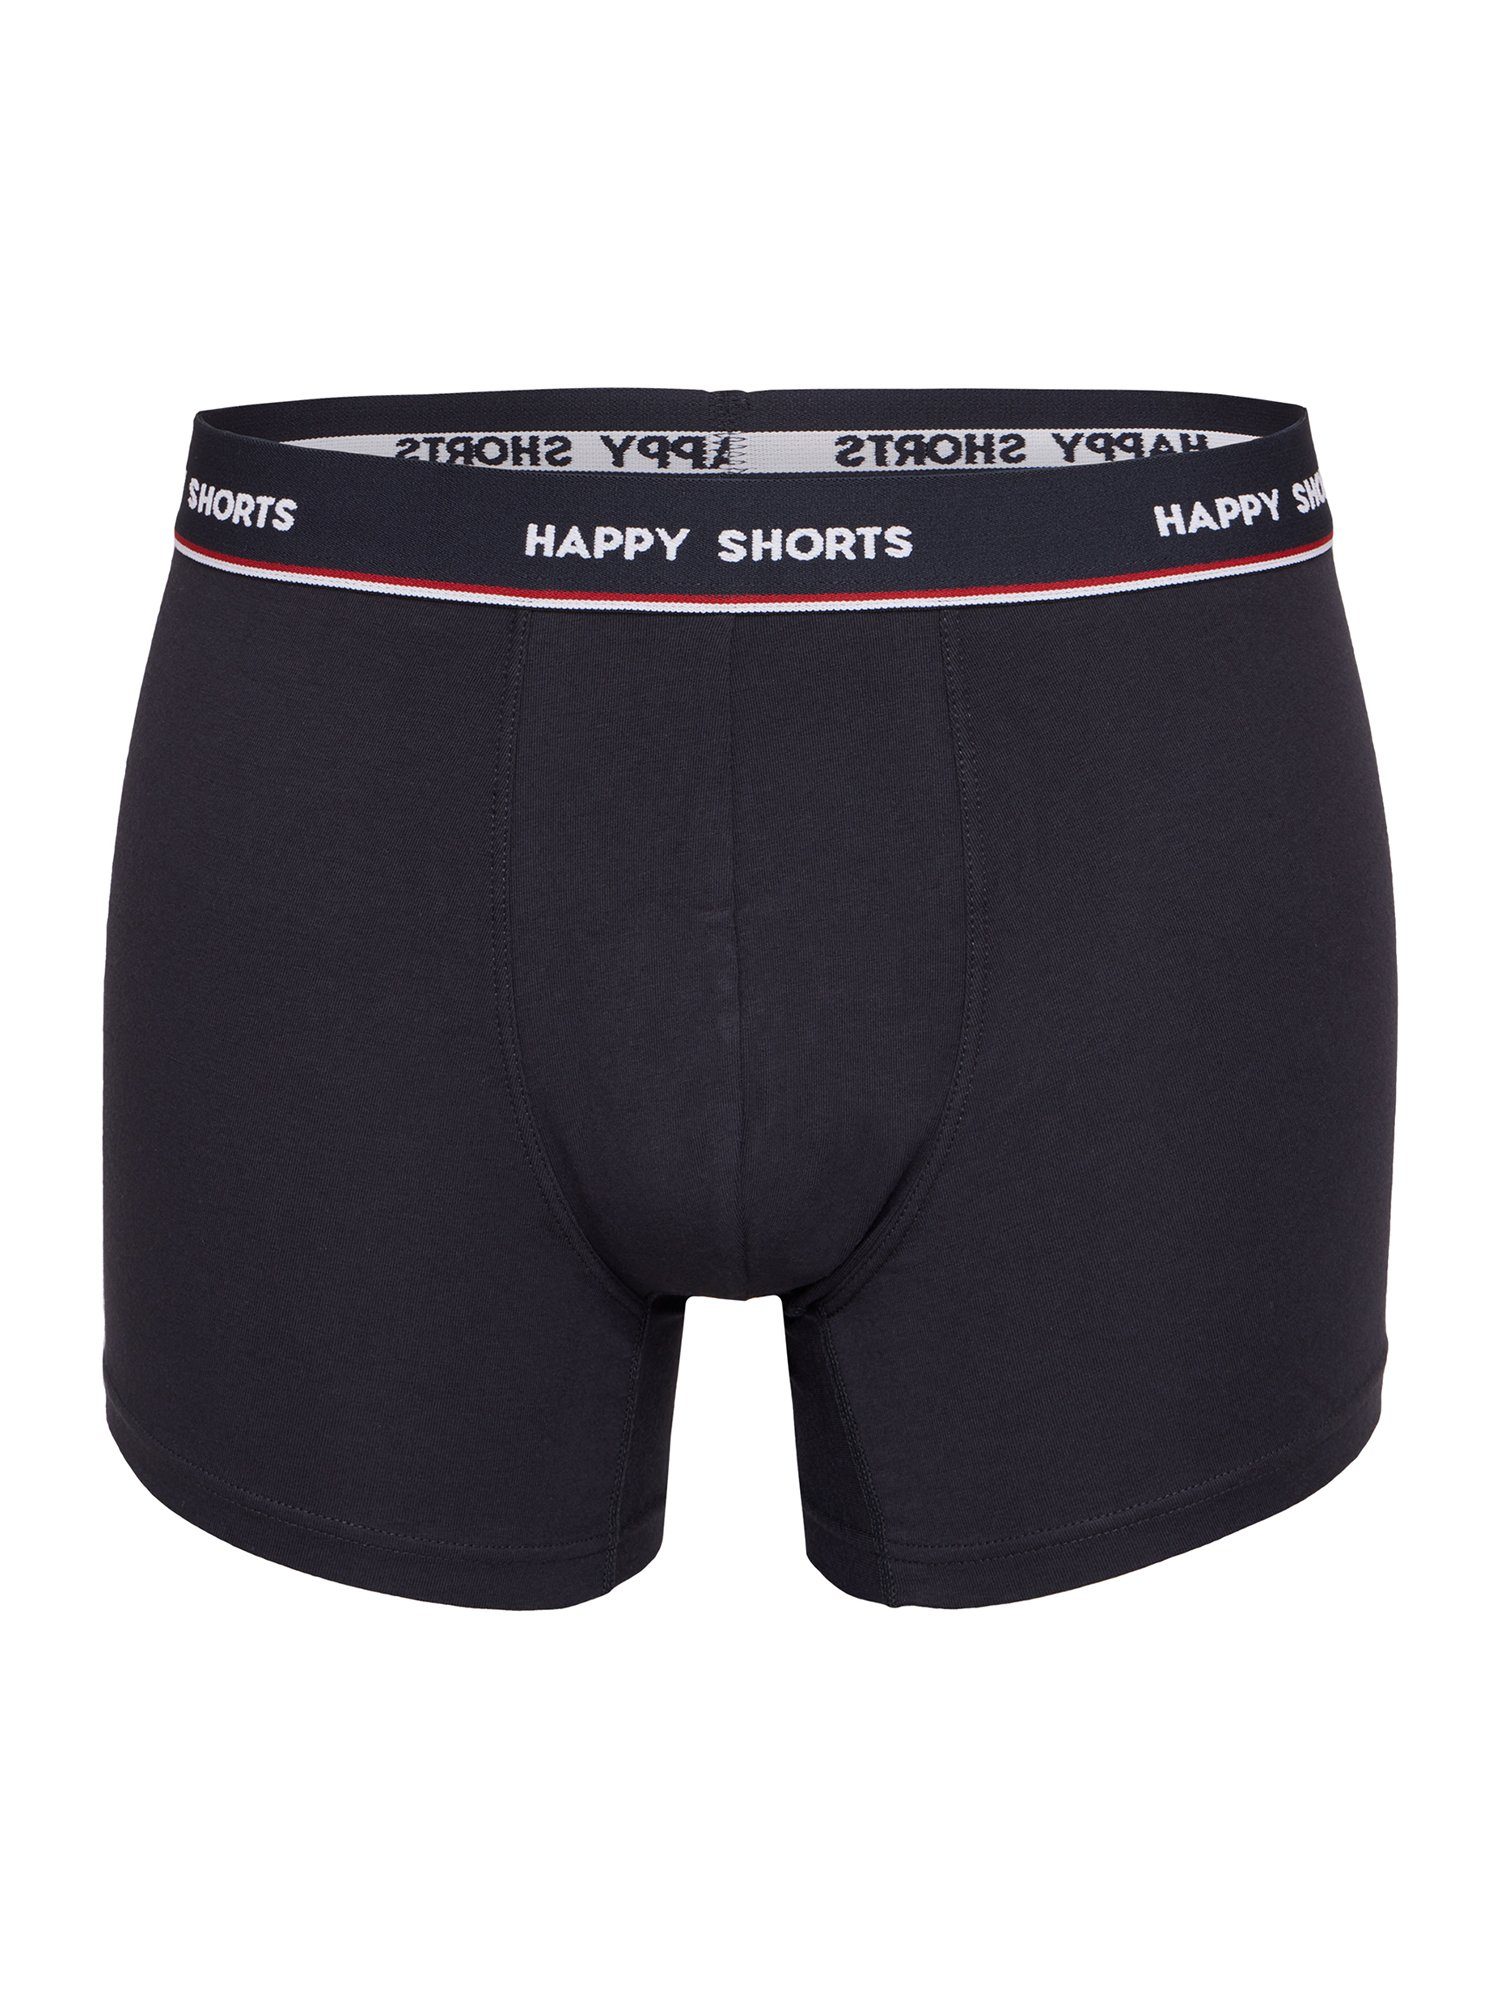 Trunks HAPPY (2-St) Retro-shorts Red SHORTS Pants Triangles unterhose Retro Retro-Boxer